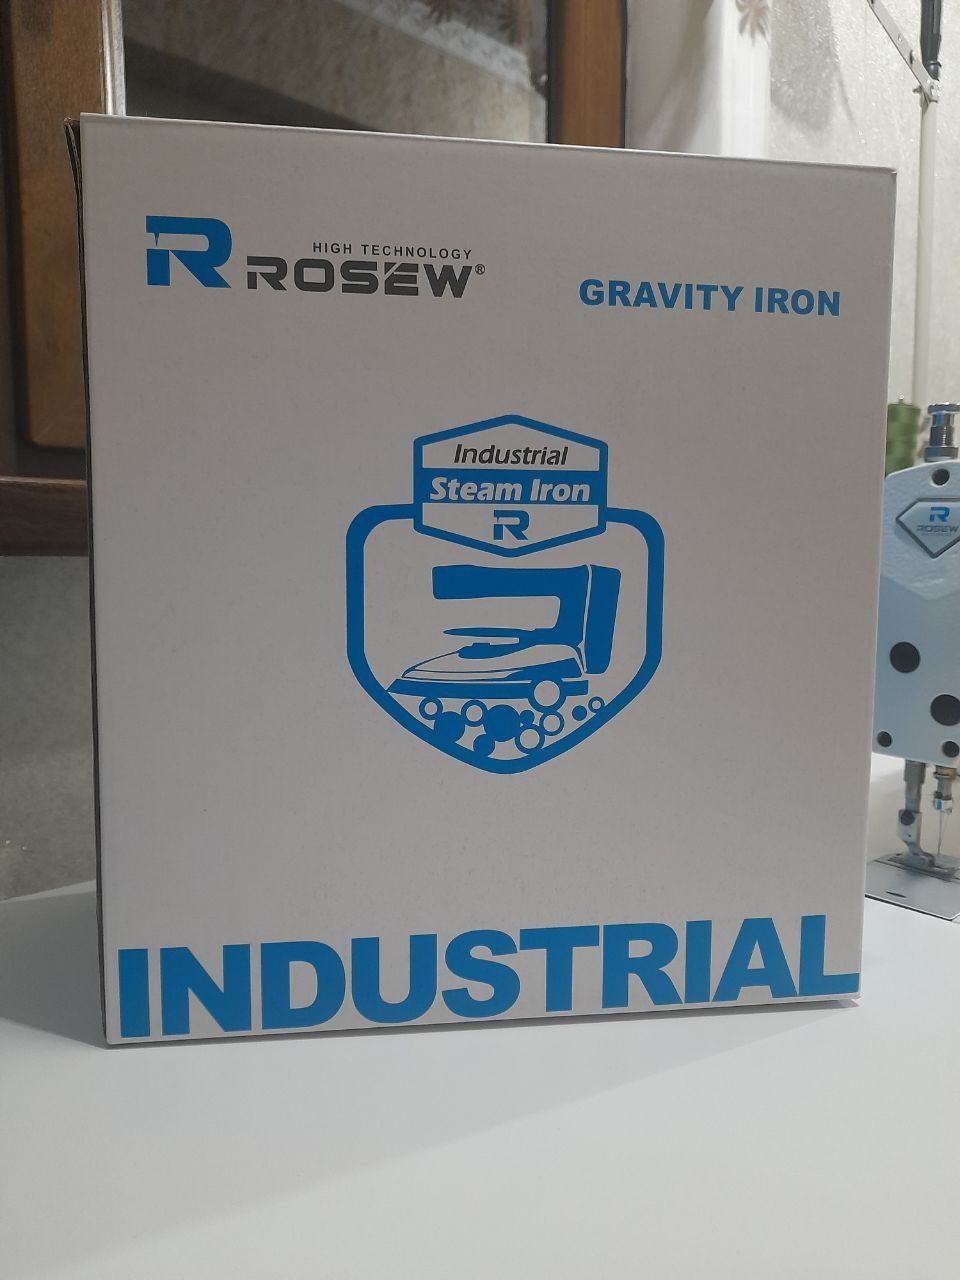 Rosew gravity iron gc-94a